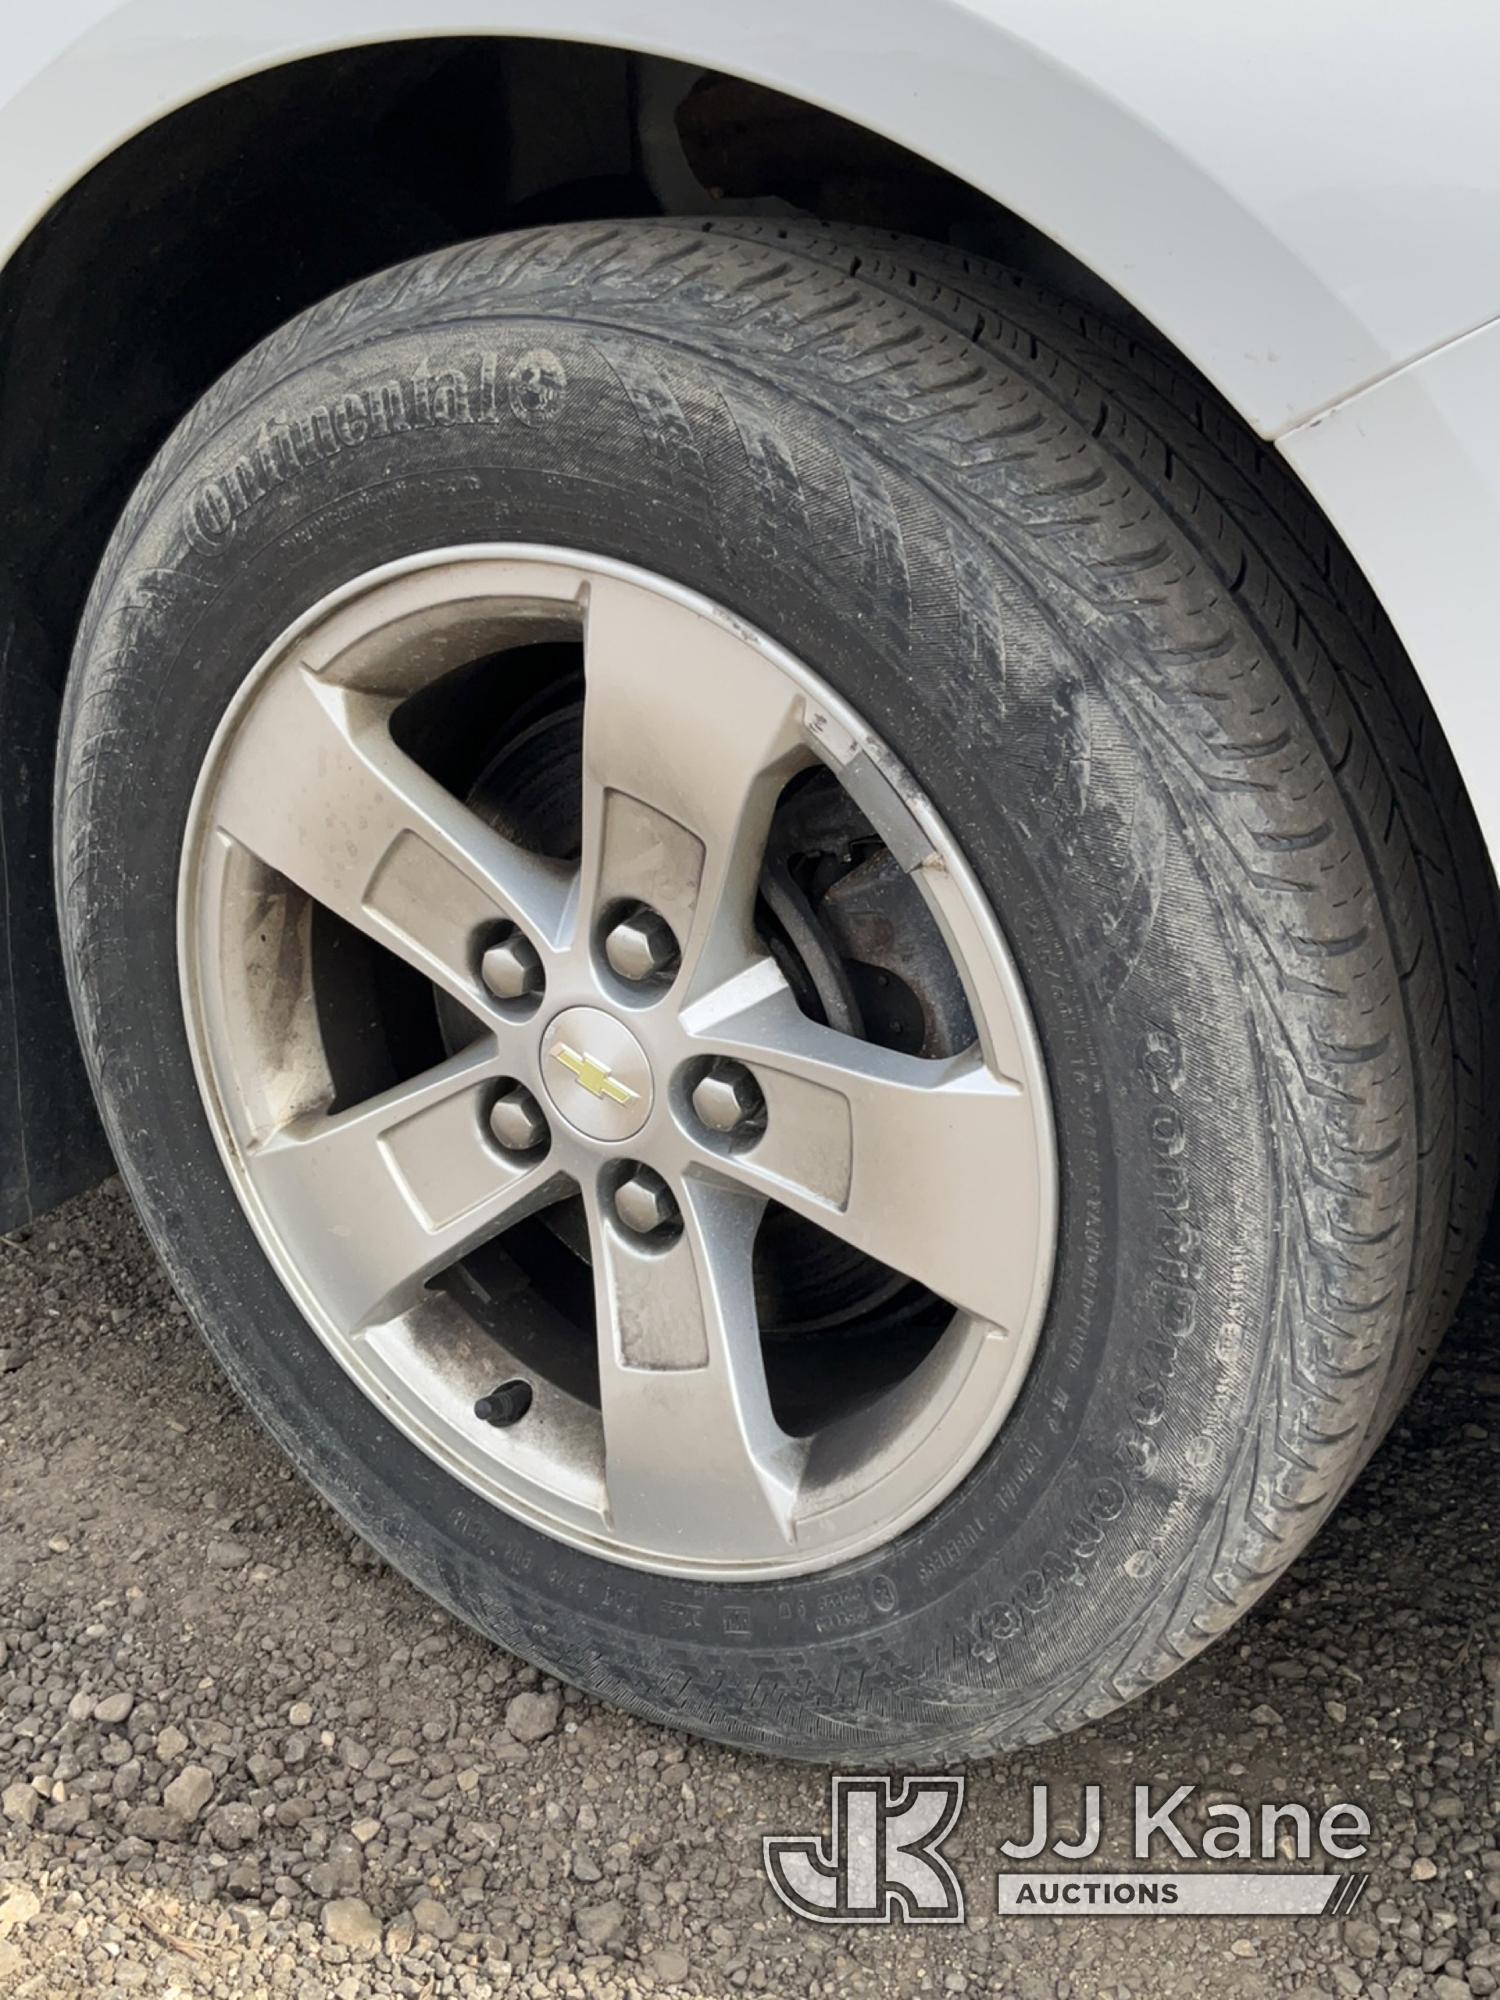 (South Beloit, IL) 2015 Chevrolet Malibu 4-Door Sedan Runs & Moves) (Paint Damage, Rust Spots